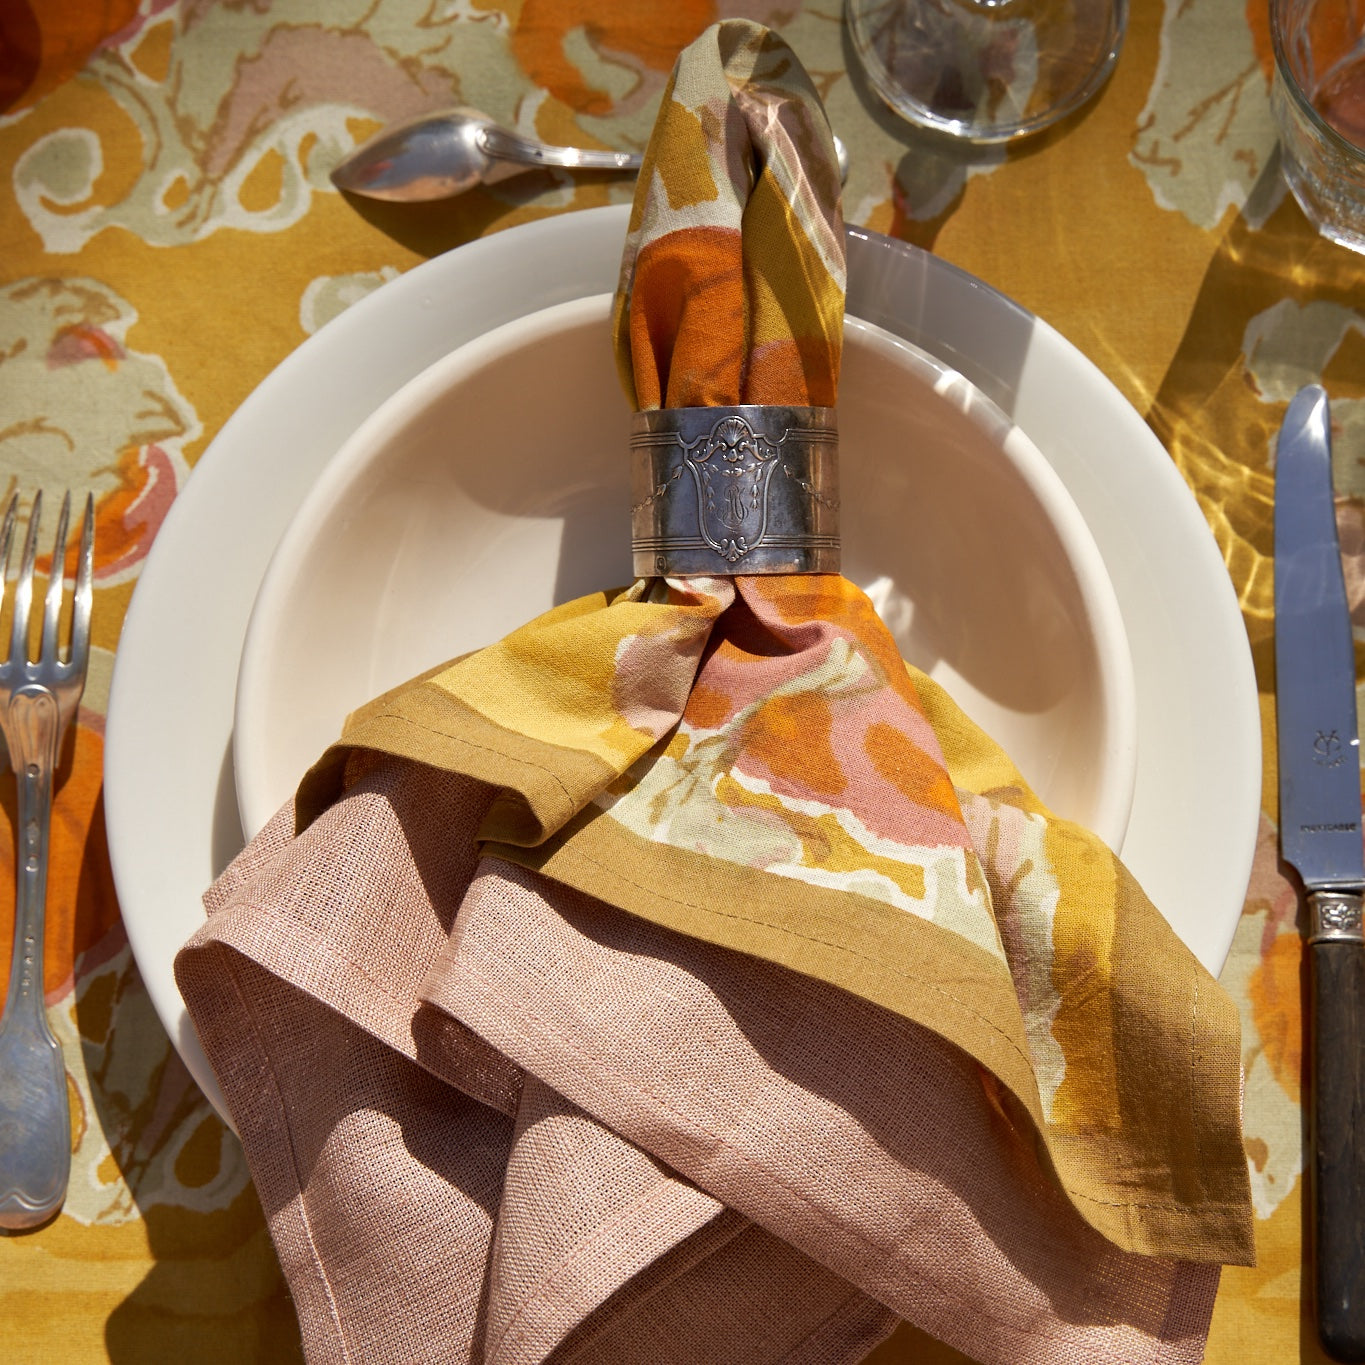 French Tablecloth Pumpkin Orange & Mustard